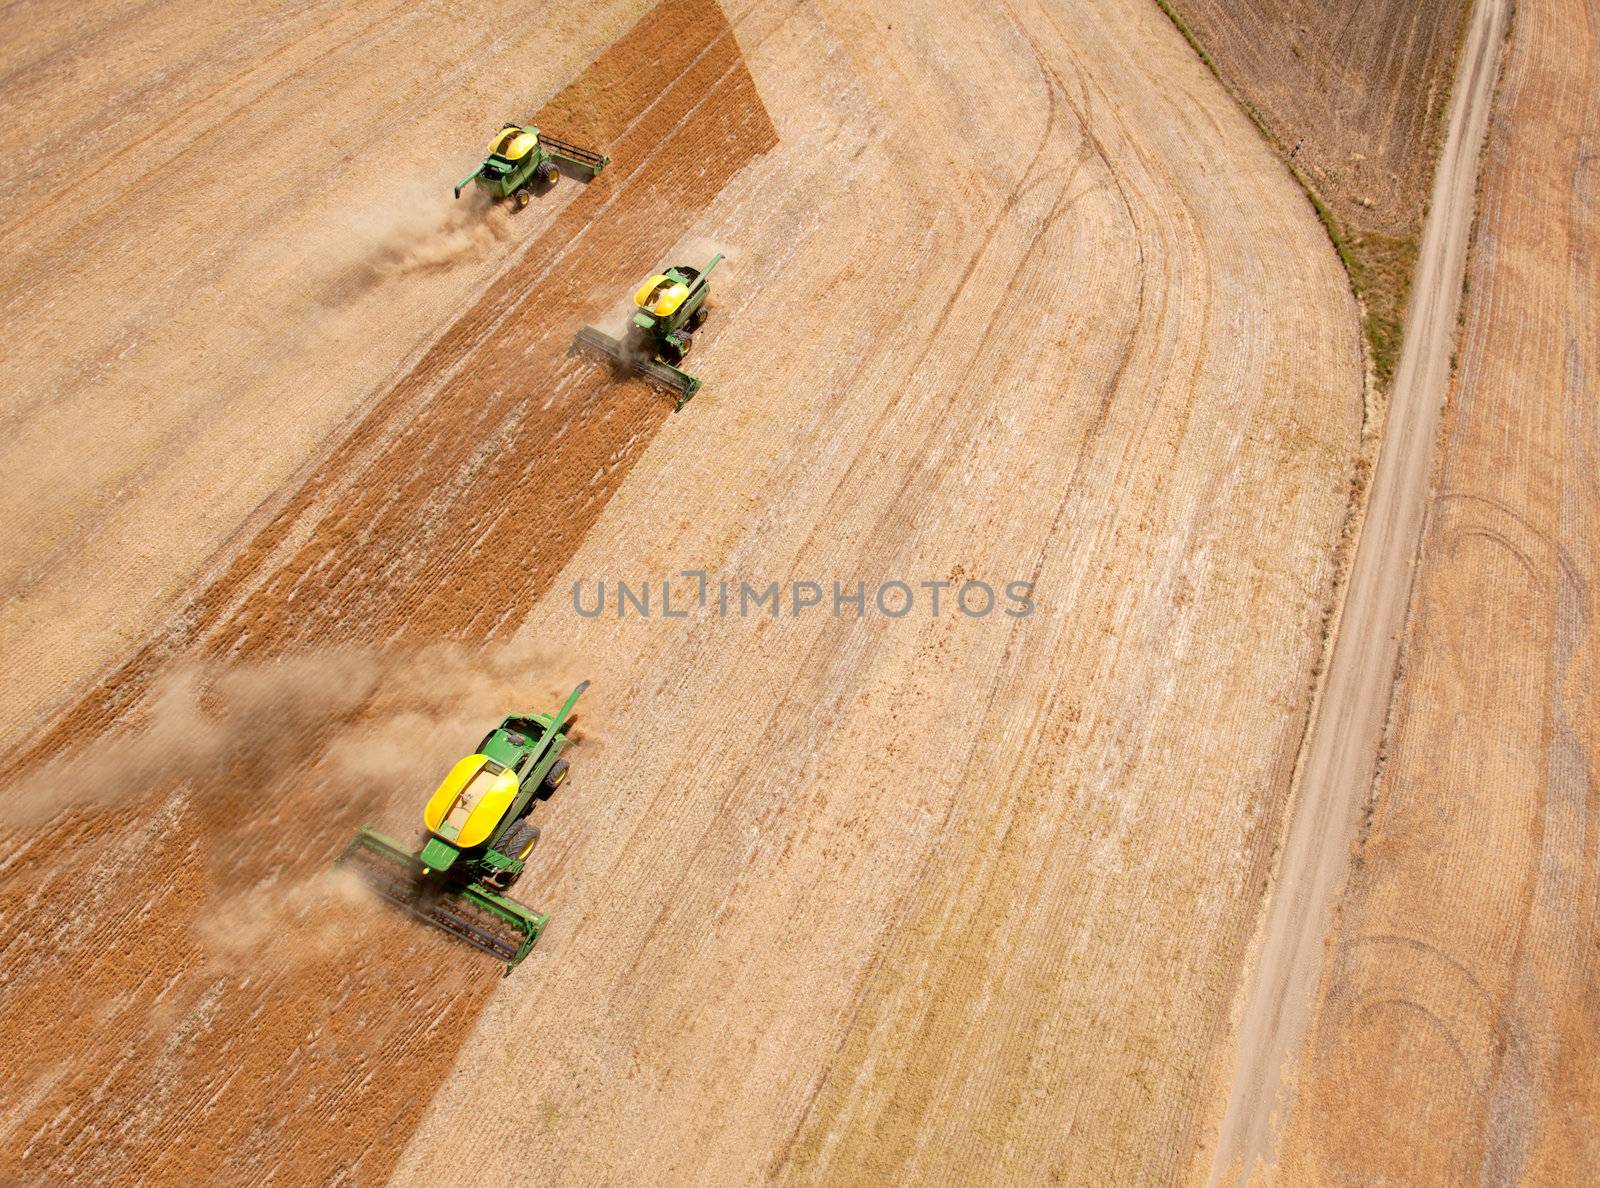 Three harvesters working in a grain field on the prairies.